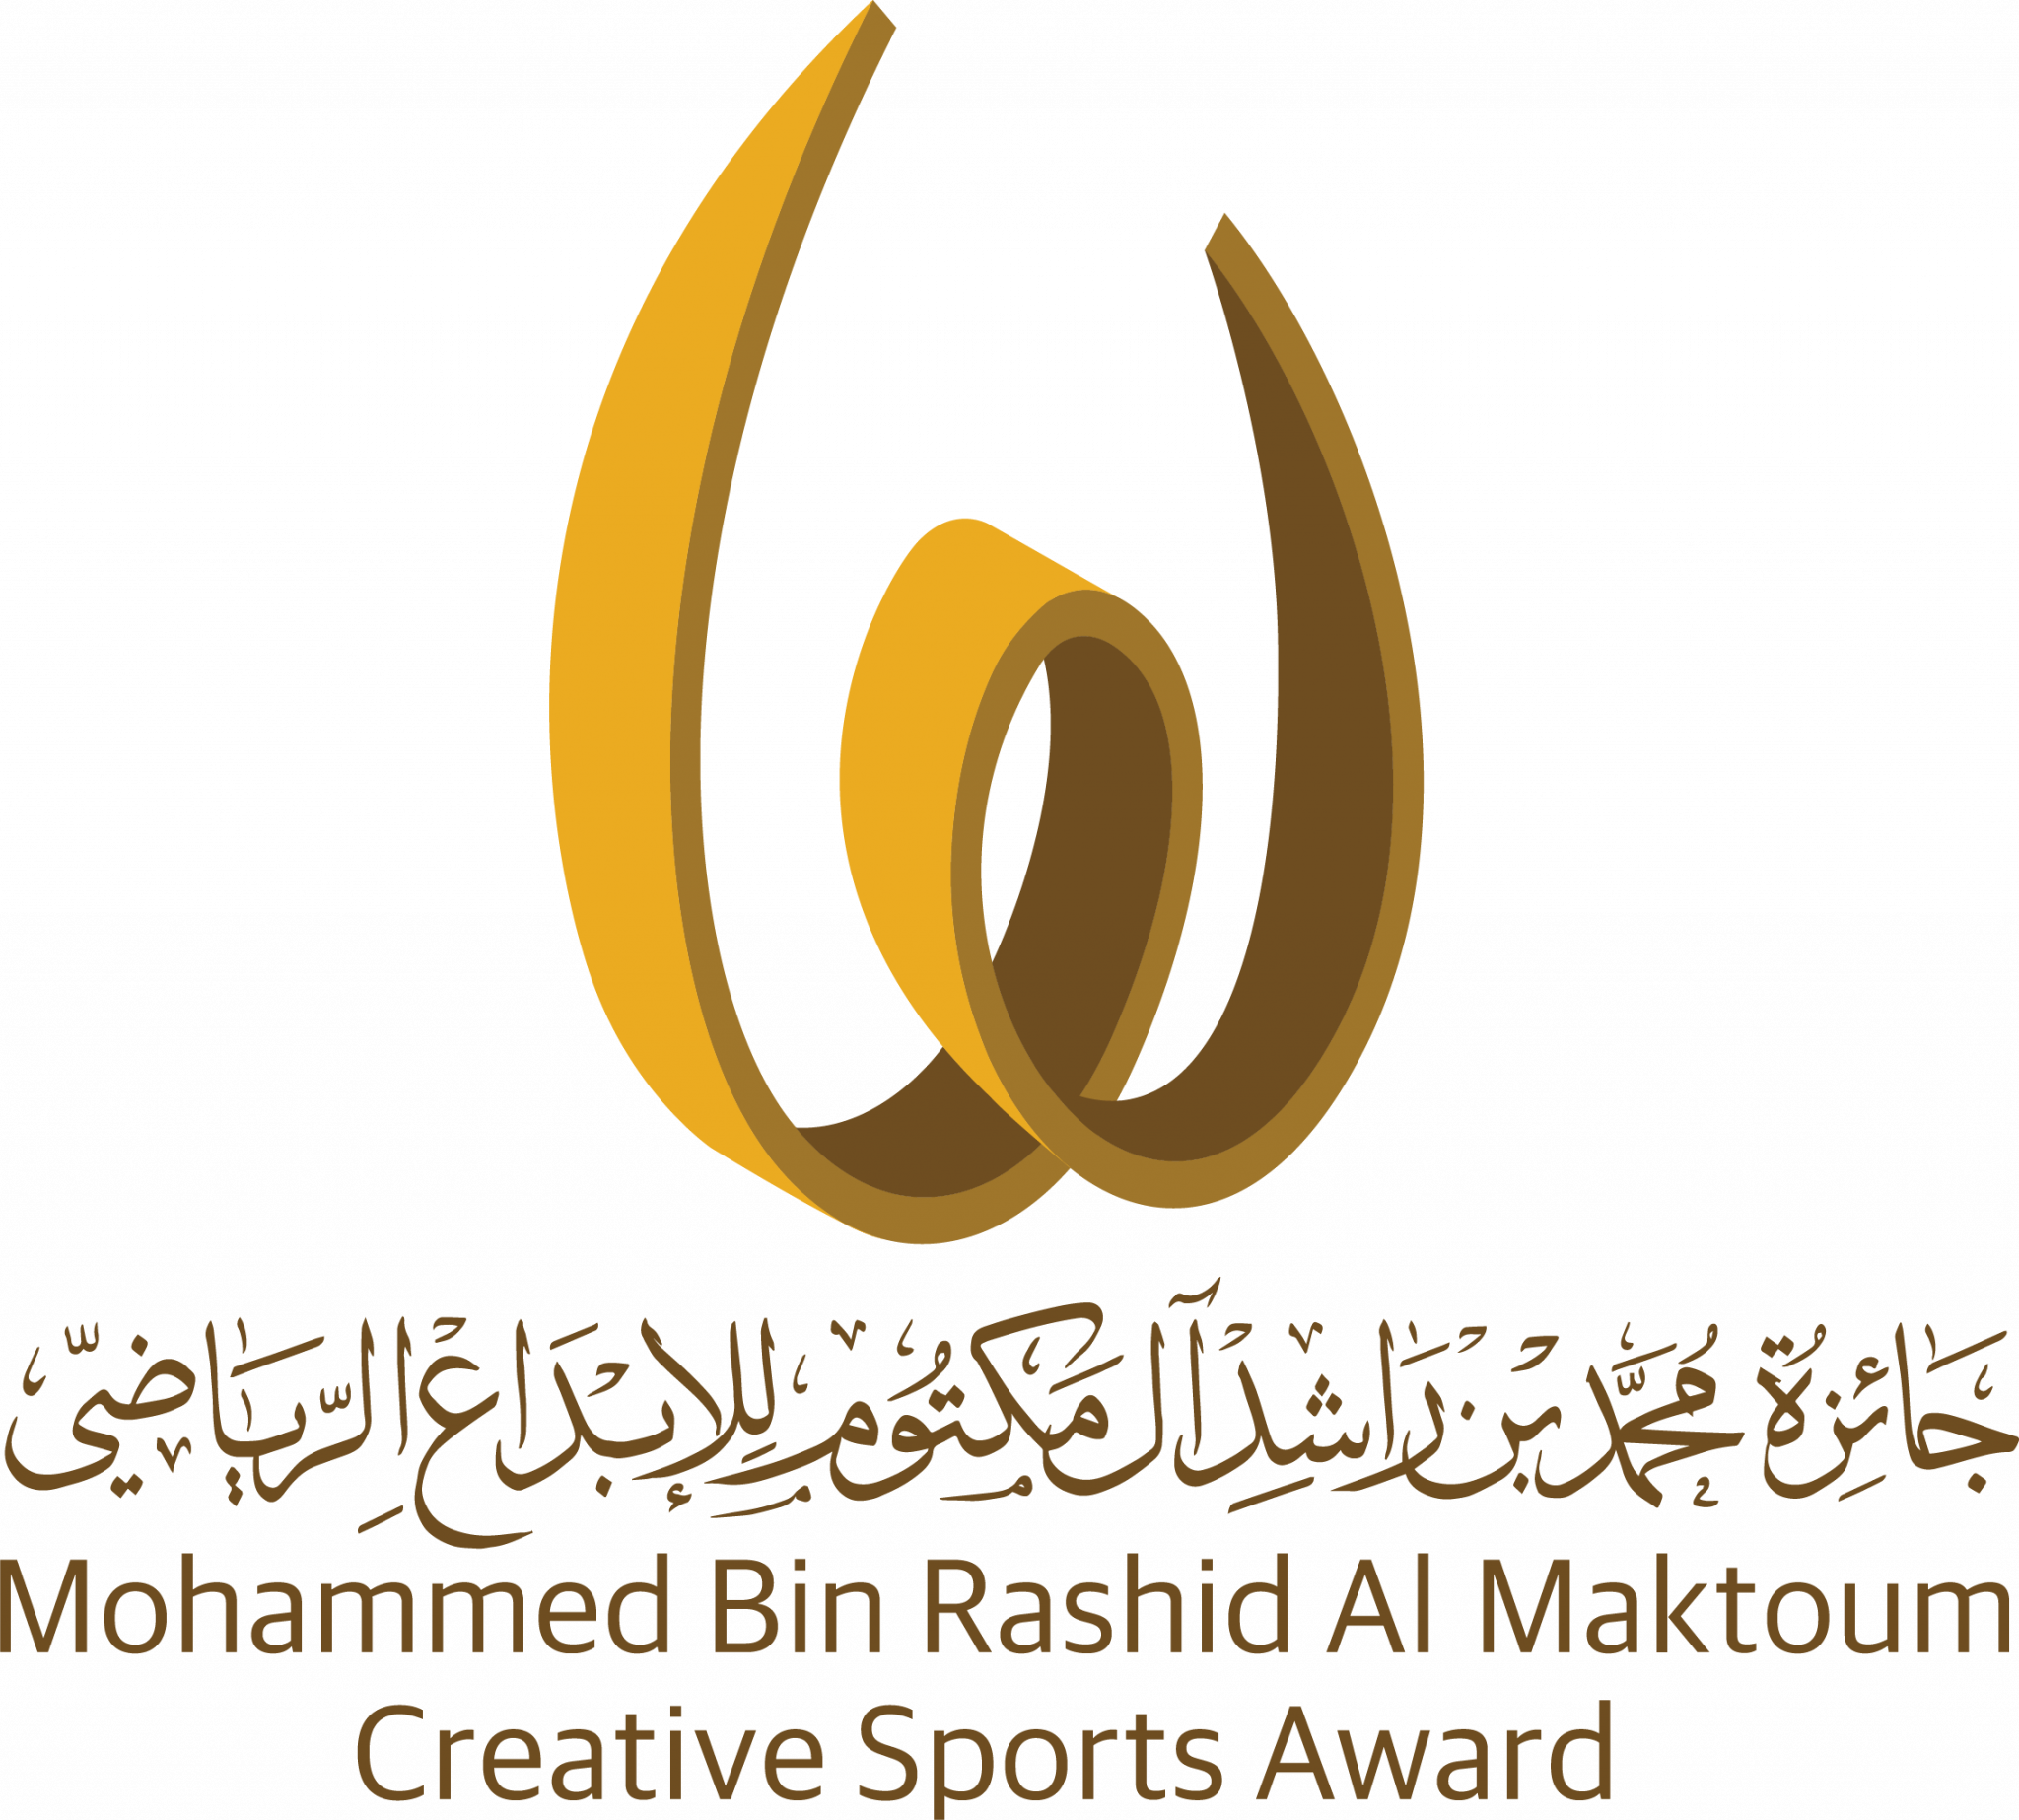 Registration opens for 11th Mohammed Bin Rashid Al Maktoum Creative Sports Award